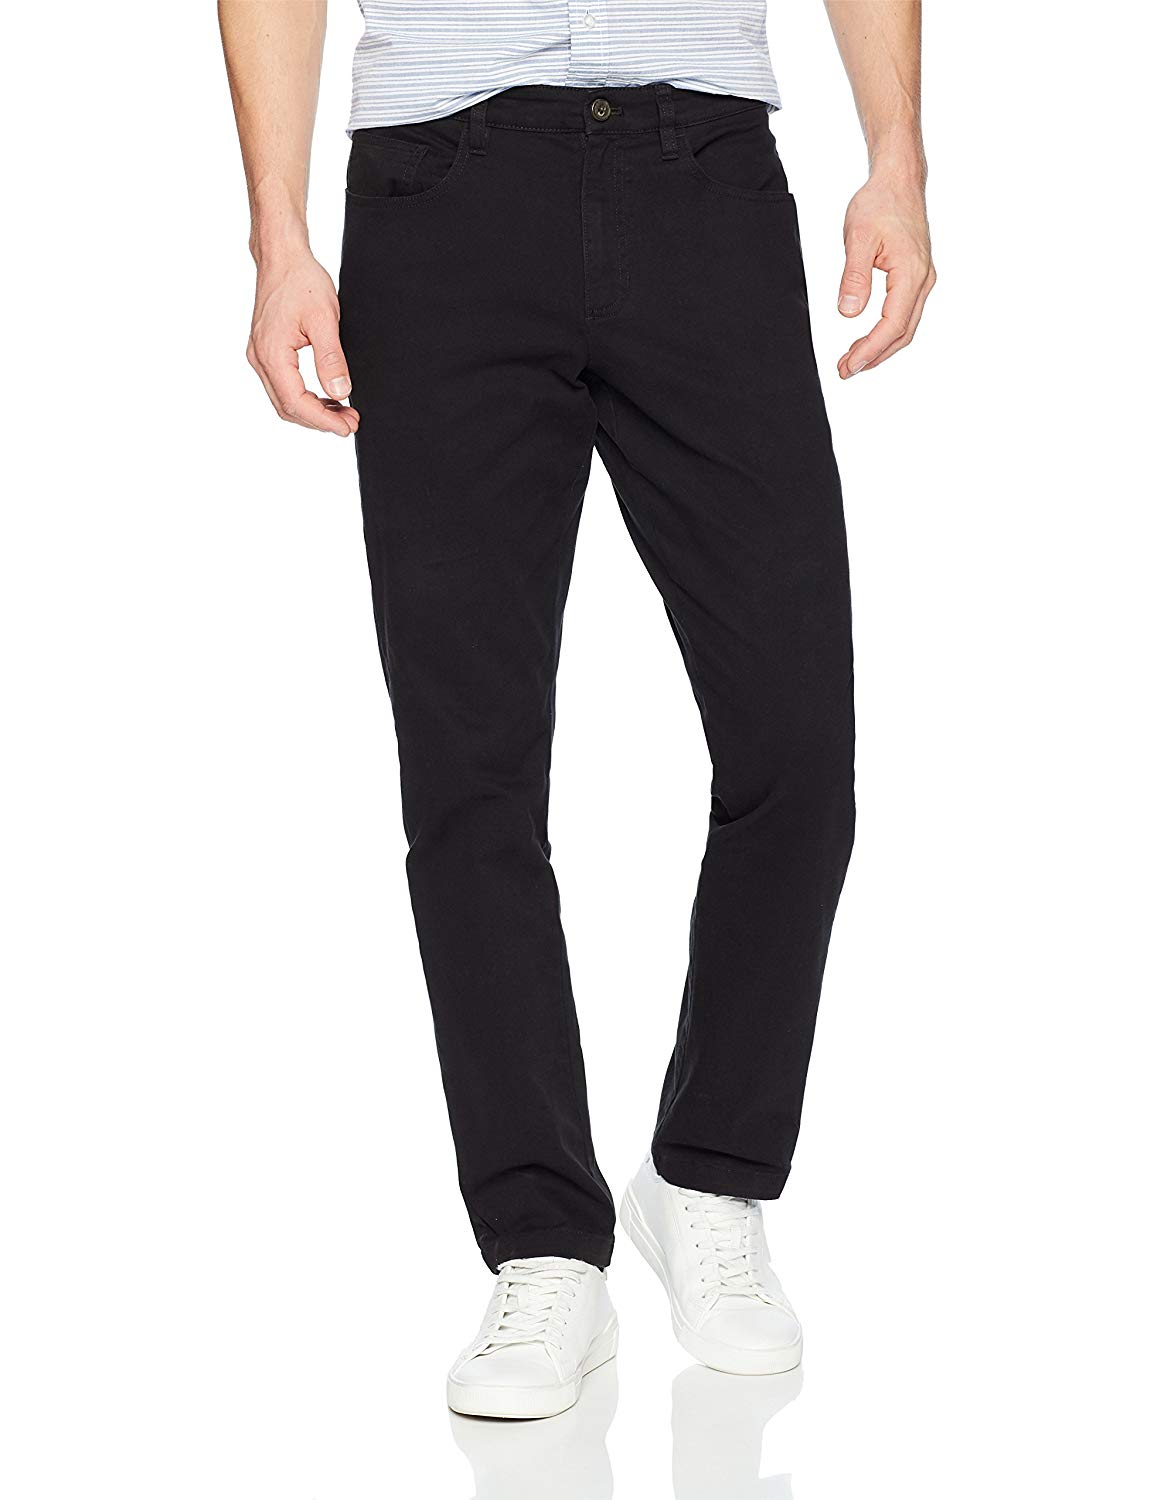 Goodthreads Men's Slim-Fit 5-Pocket Chino Pant, Black,, Black, Size 34W